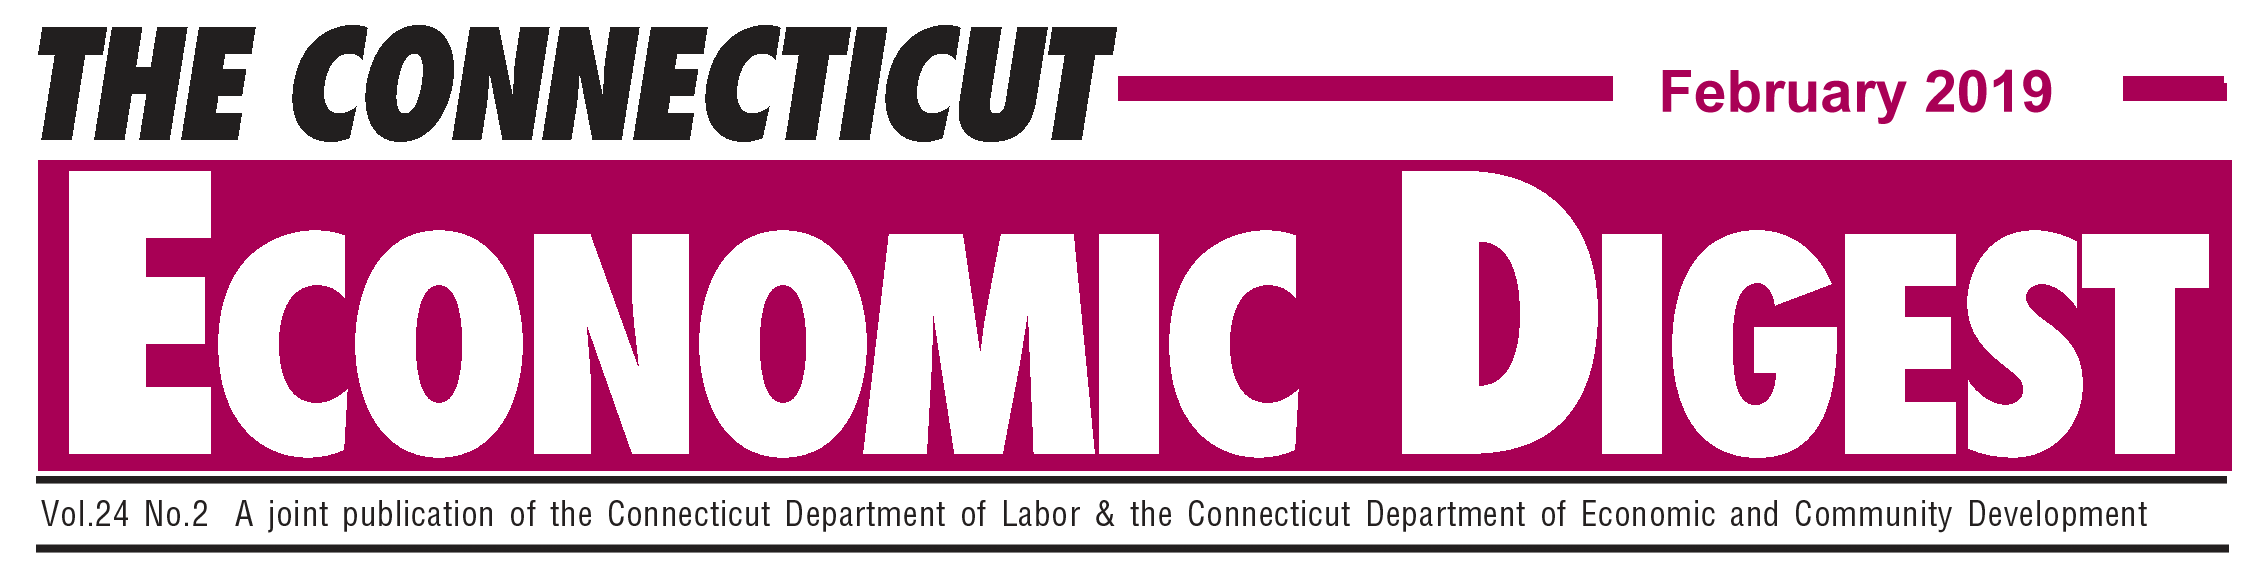 February 2019 Connecticut Economic Digest